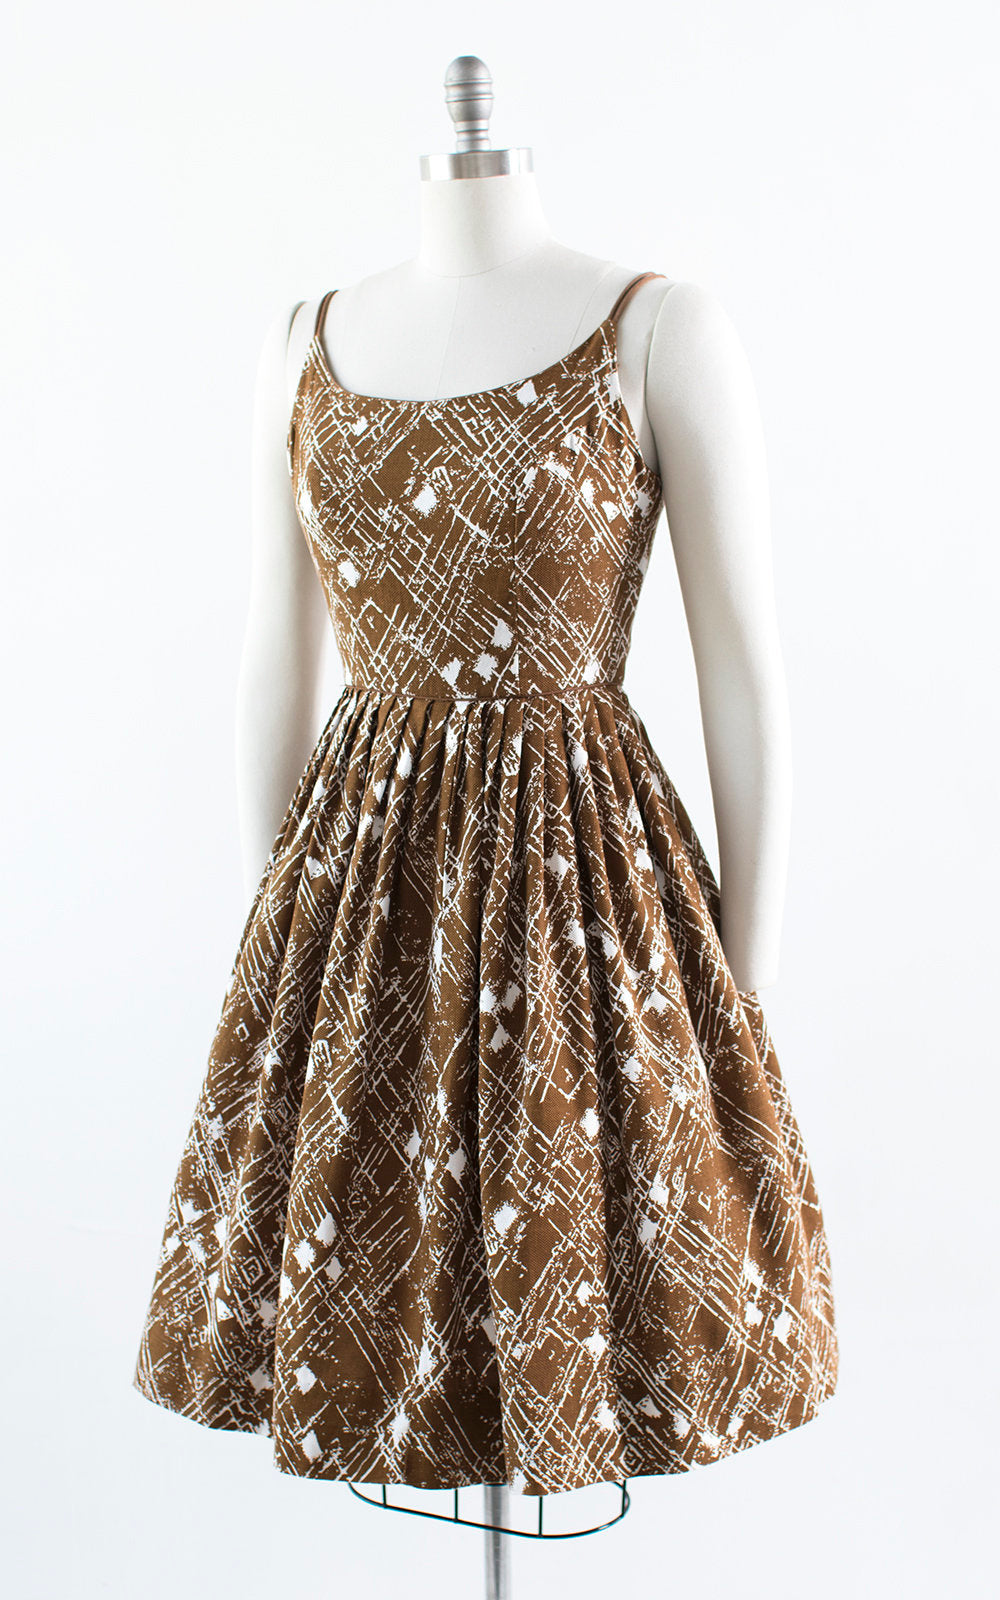 Vintage 1950s 1960s Dress | 50s 60s Cotton Plaid Polka Dot Printed Sundress Spaghetti Strap Day Dress (small)